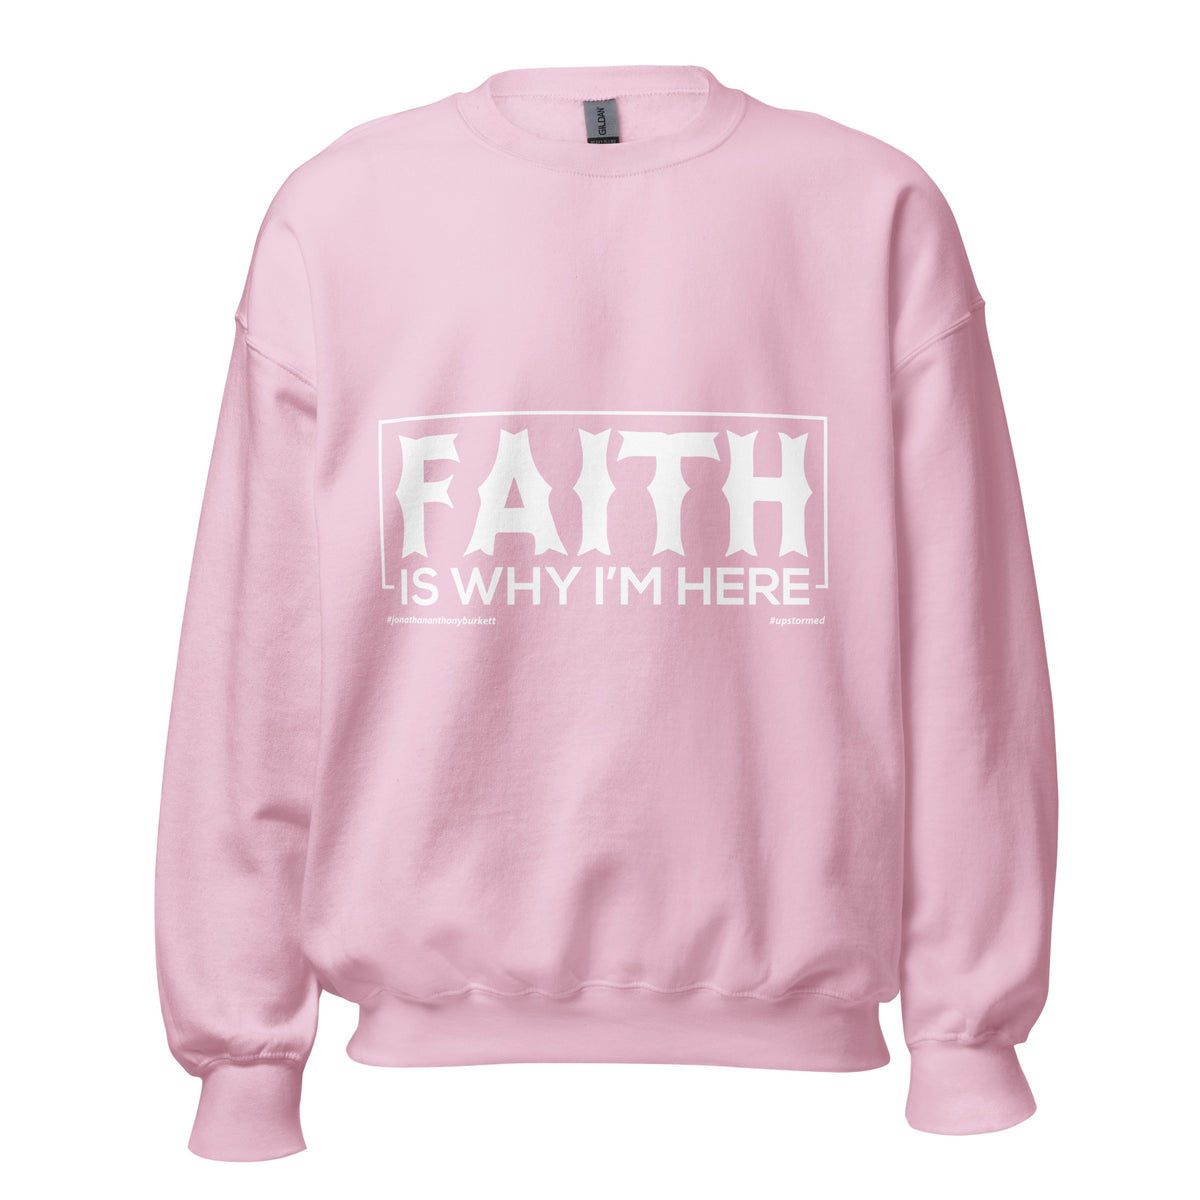 Faith Is Why I'm Here Upstormed Sweatshirt